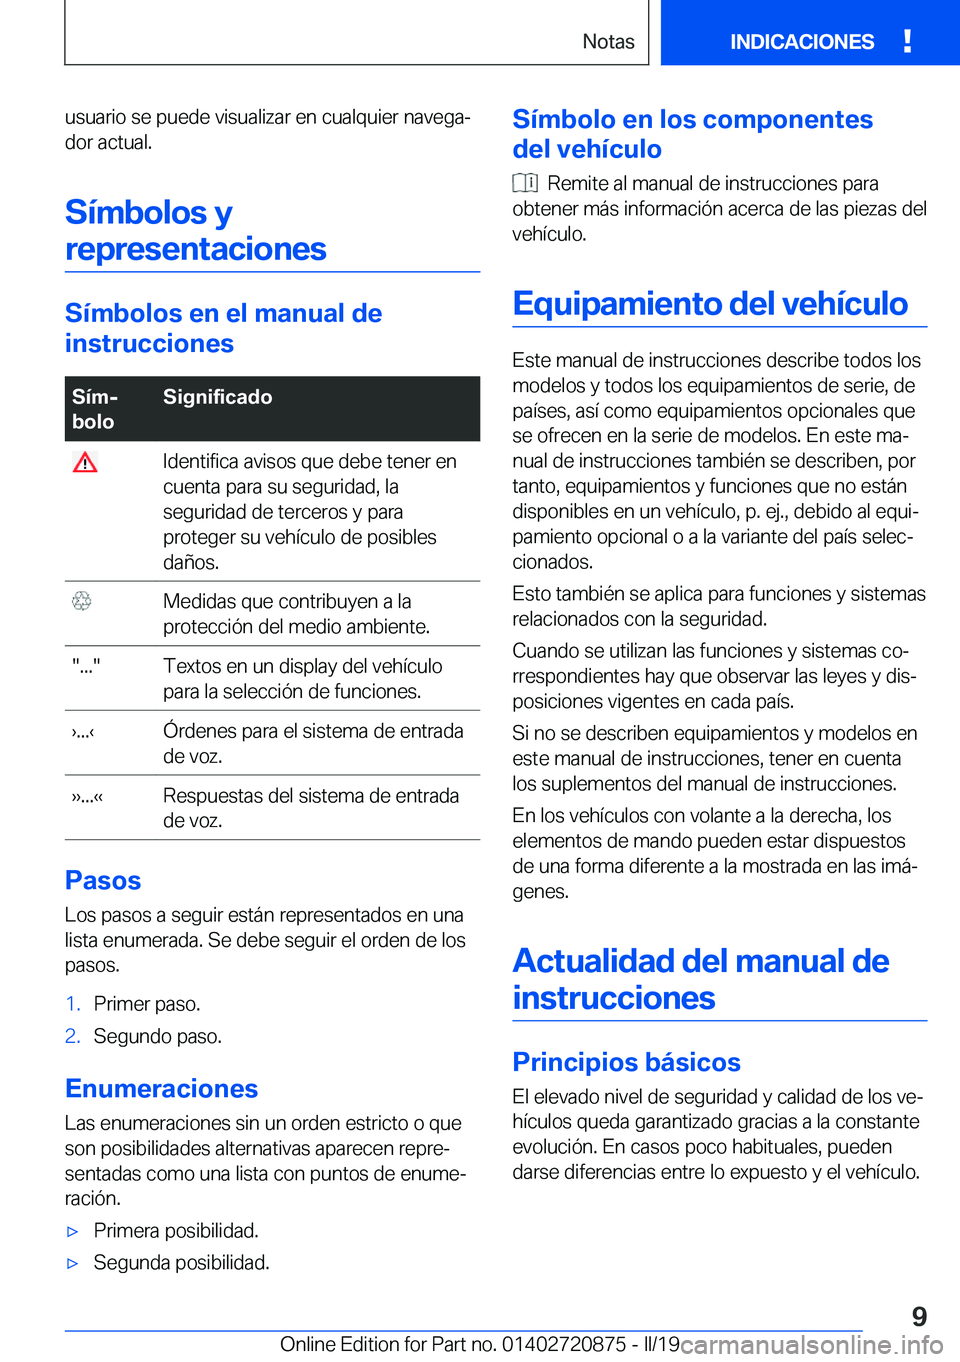 BMW X7 2019  Manuales de Empleo (in Spanish) �u�s�u�a�r�i�o��s�e��p�u�e�d�e��v�i�s�u�a�l�i�z�a�r��e�n��c�u�a�l�q�u�i�e�r��n�a�v�e�g�aª
�d�o�r��a�c�t�u�a�l�.
�S�